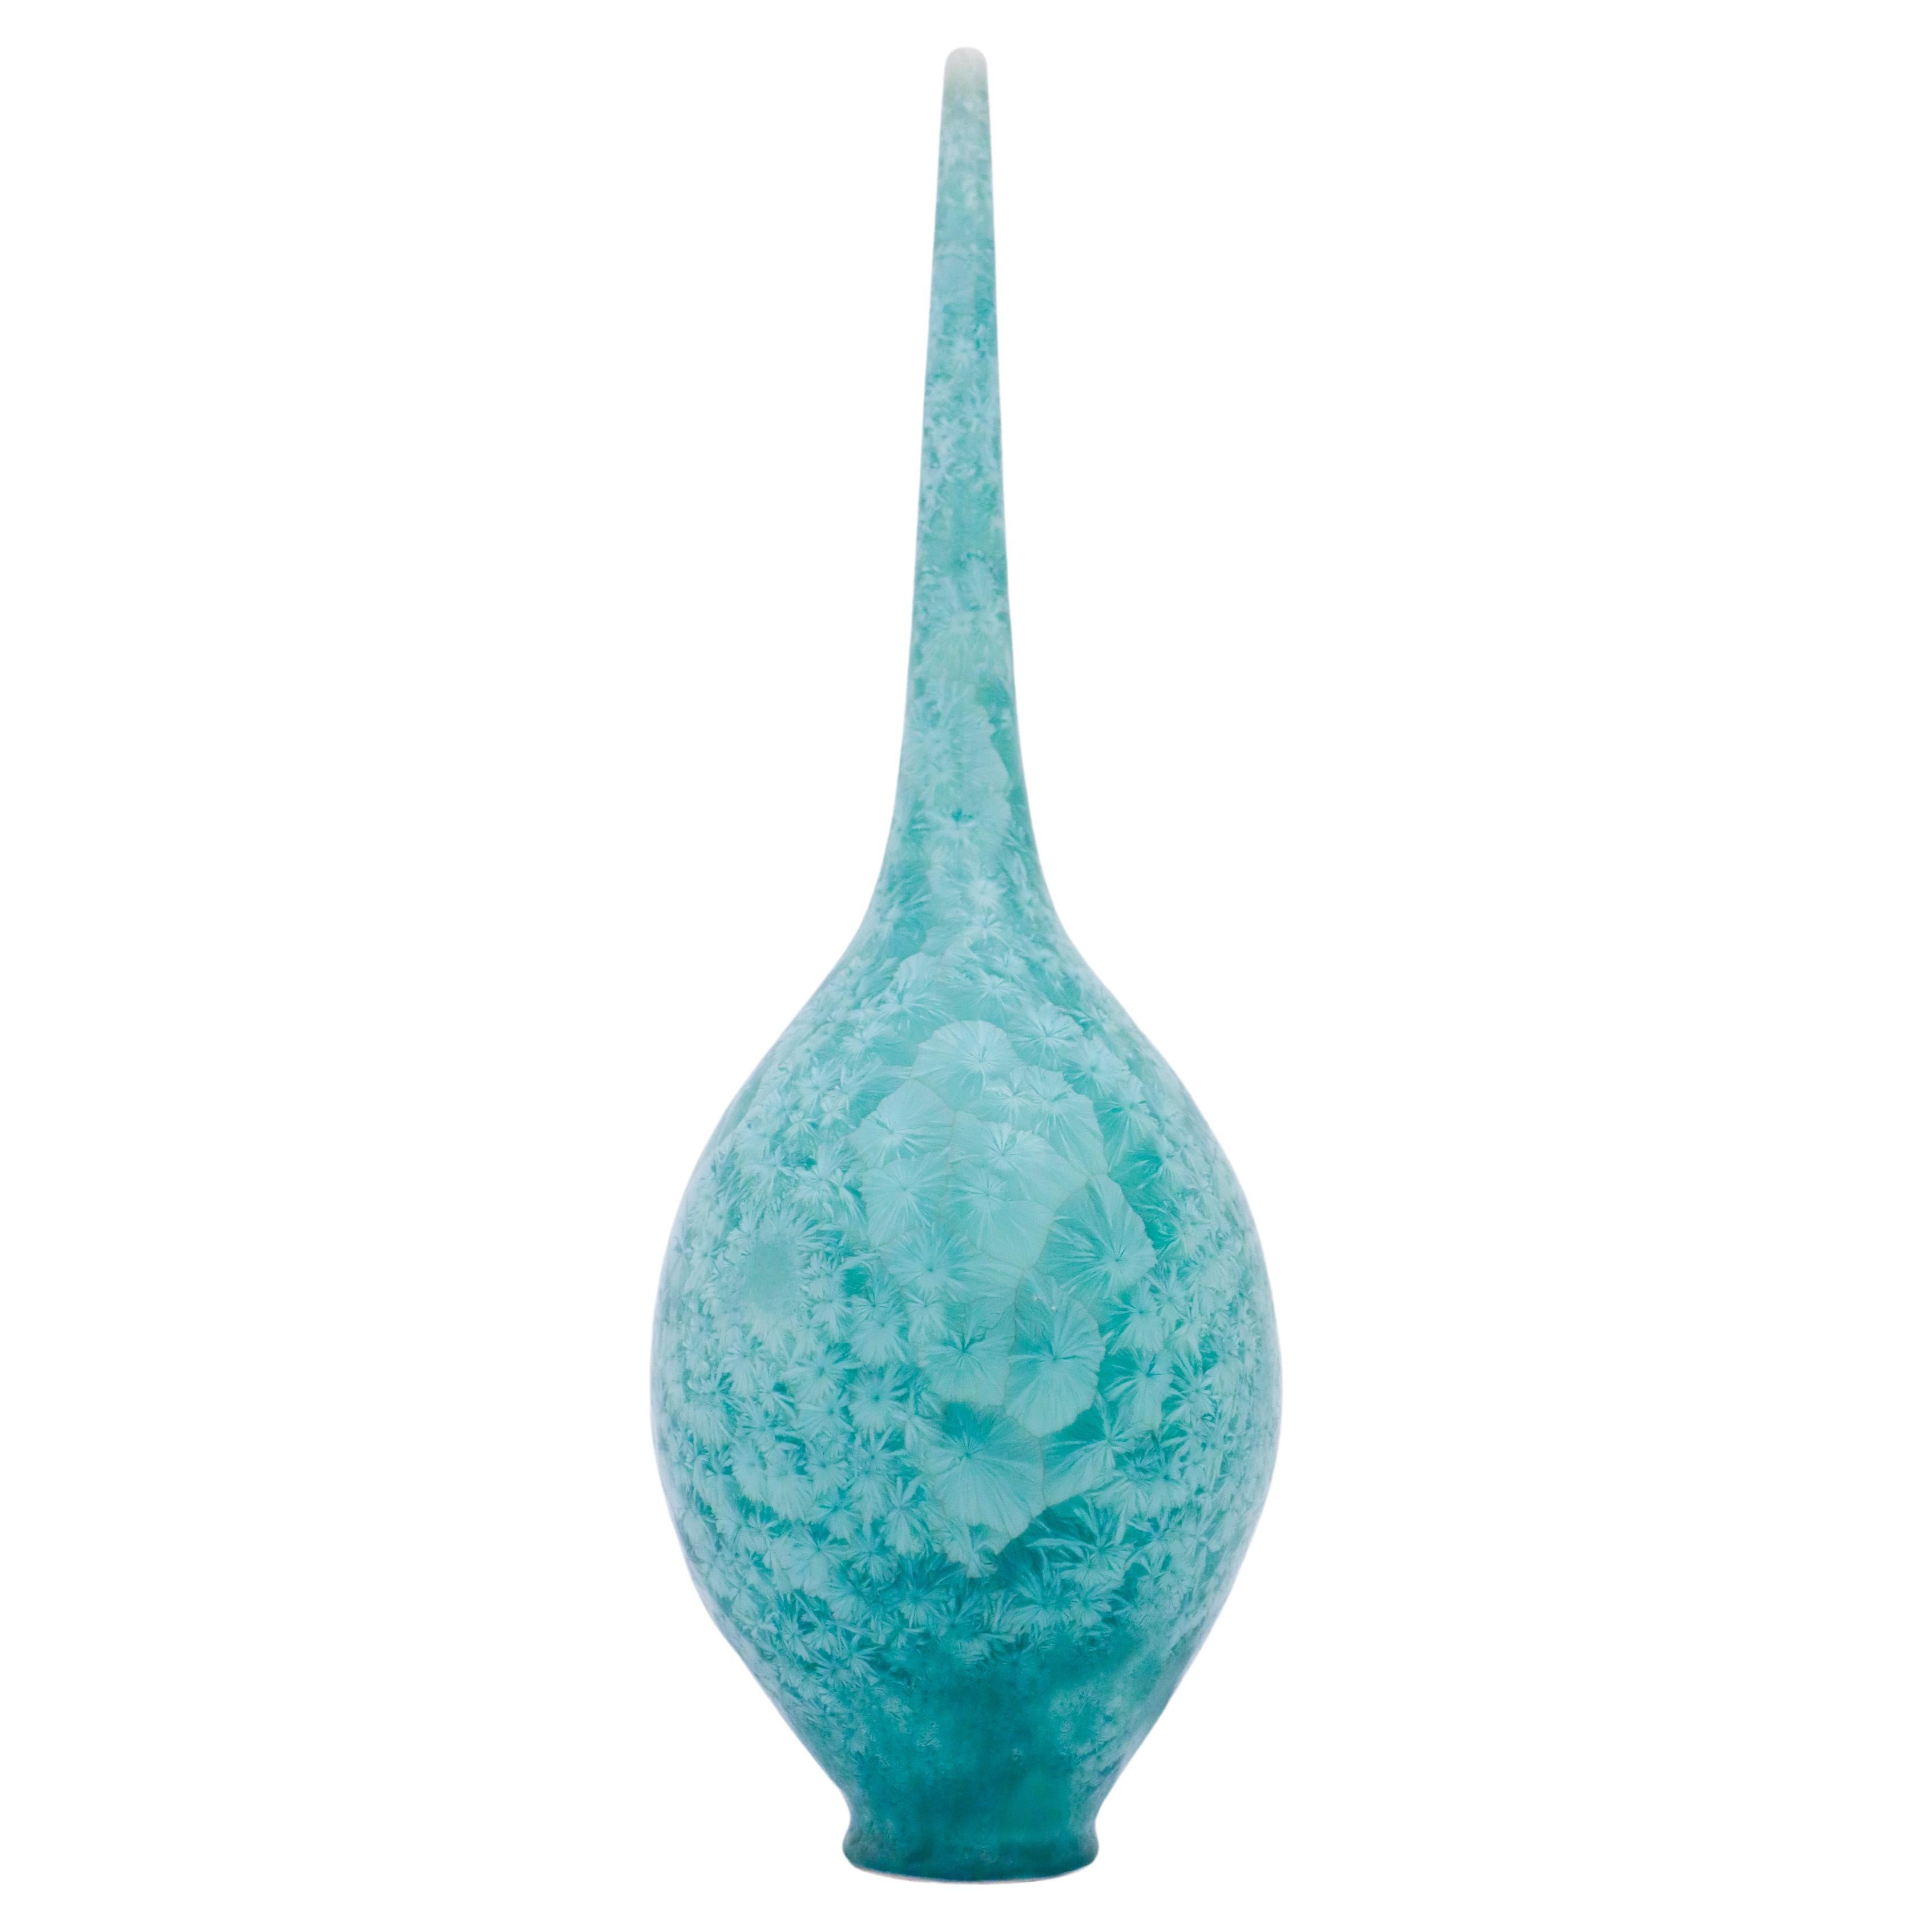 Isak Isaksson, Turquoise Crystalline Glaze, Contemporary Swedish Ceramicist